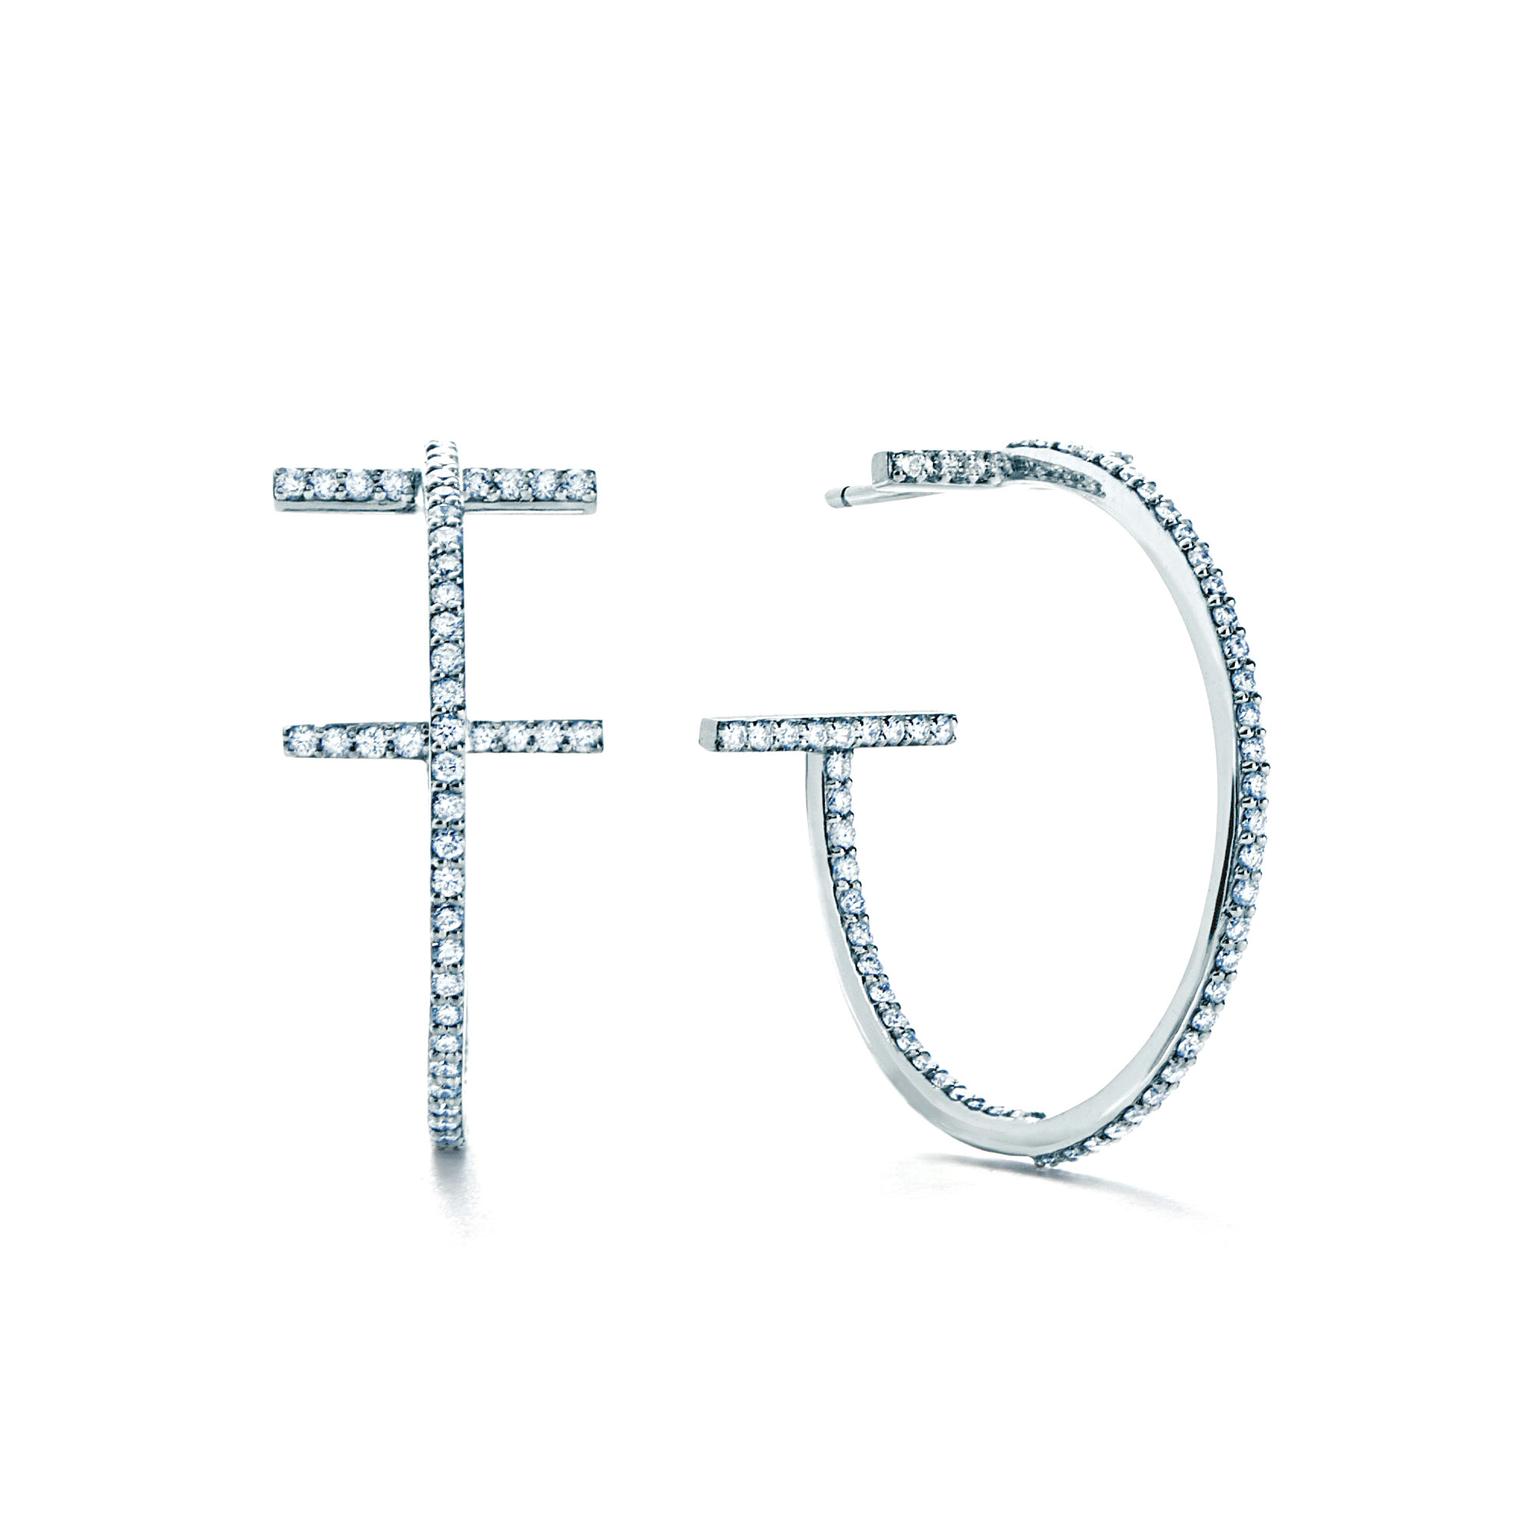 Tiffany  Co Metro Diamond Hoop Earrings  038ctw   100 Ways